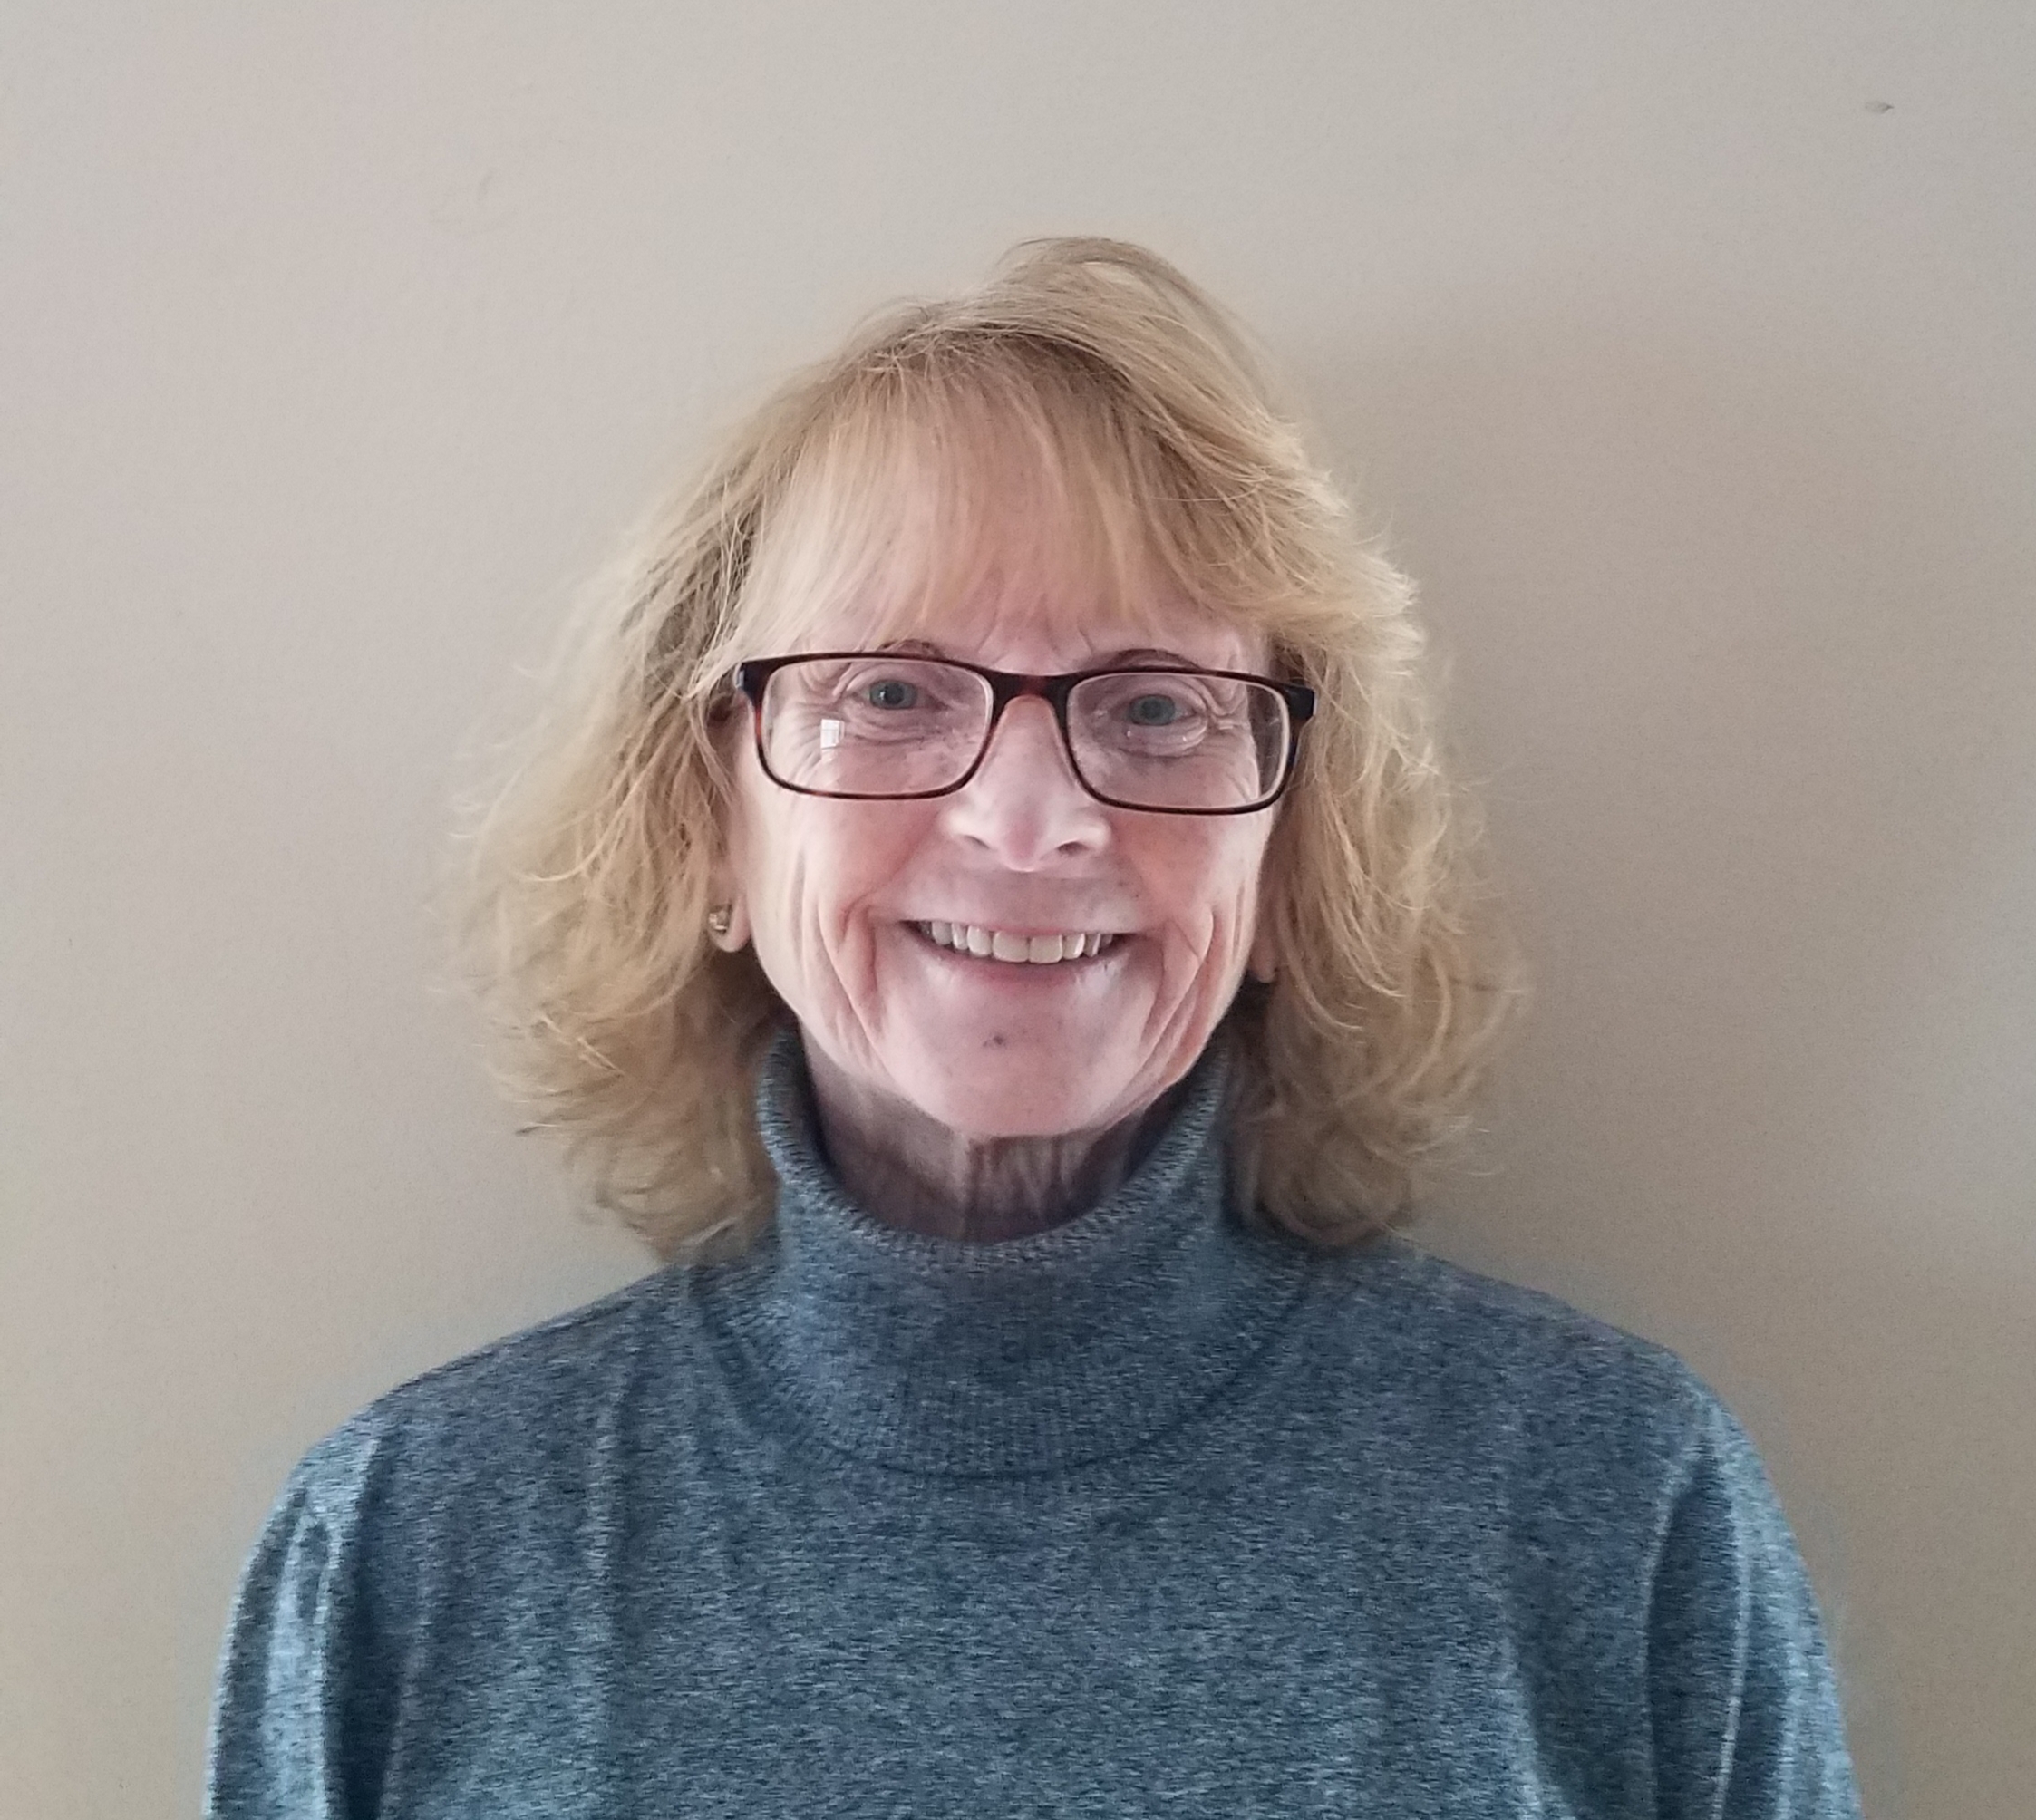 Paula B. – 2019 Staffing Employee of the Year